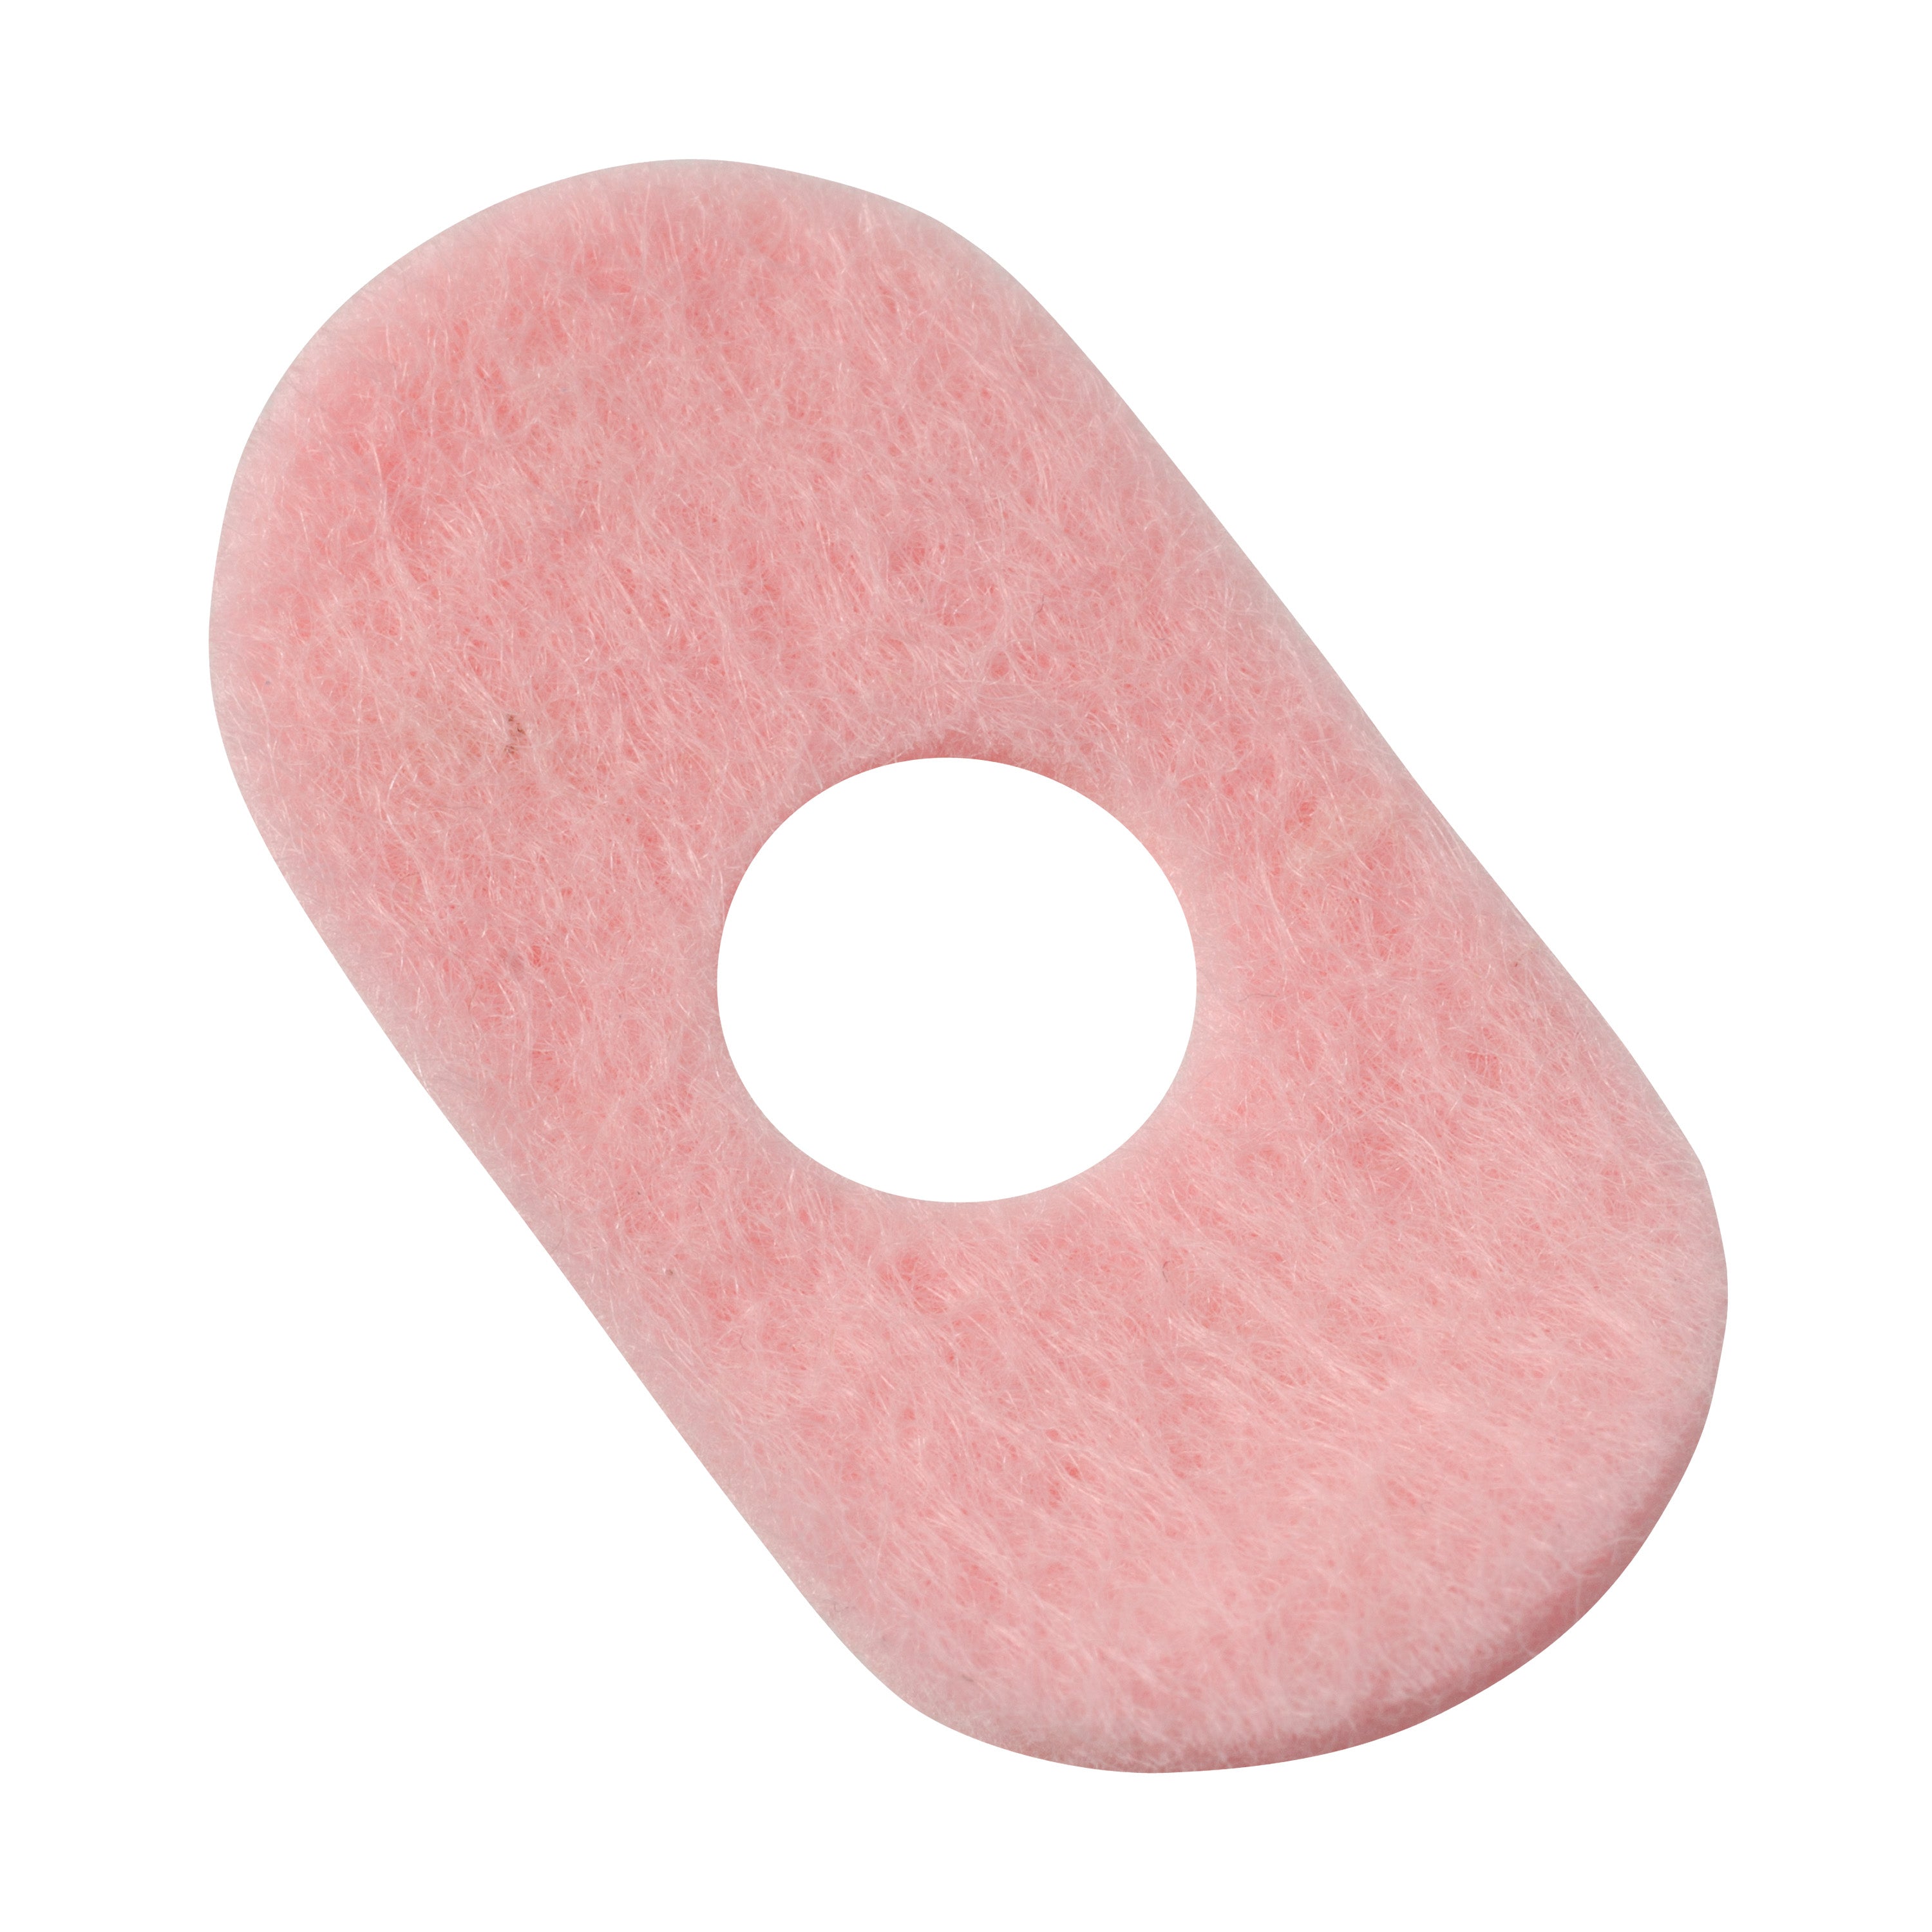 Stein's 1/8" Pink Adhesive Felt C-3 Corn Pad, 9/pk AM-765-1041-0009